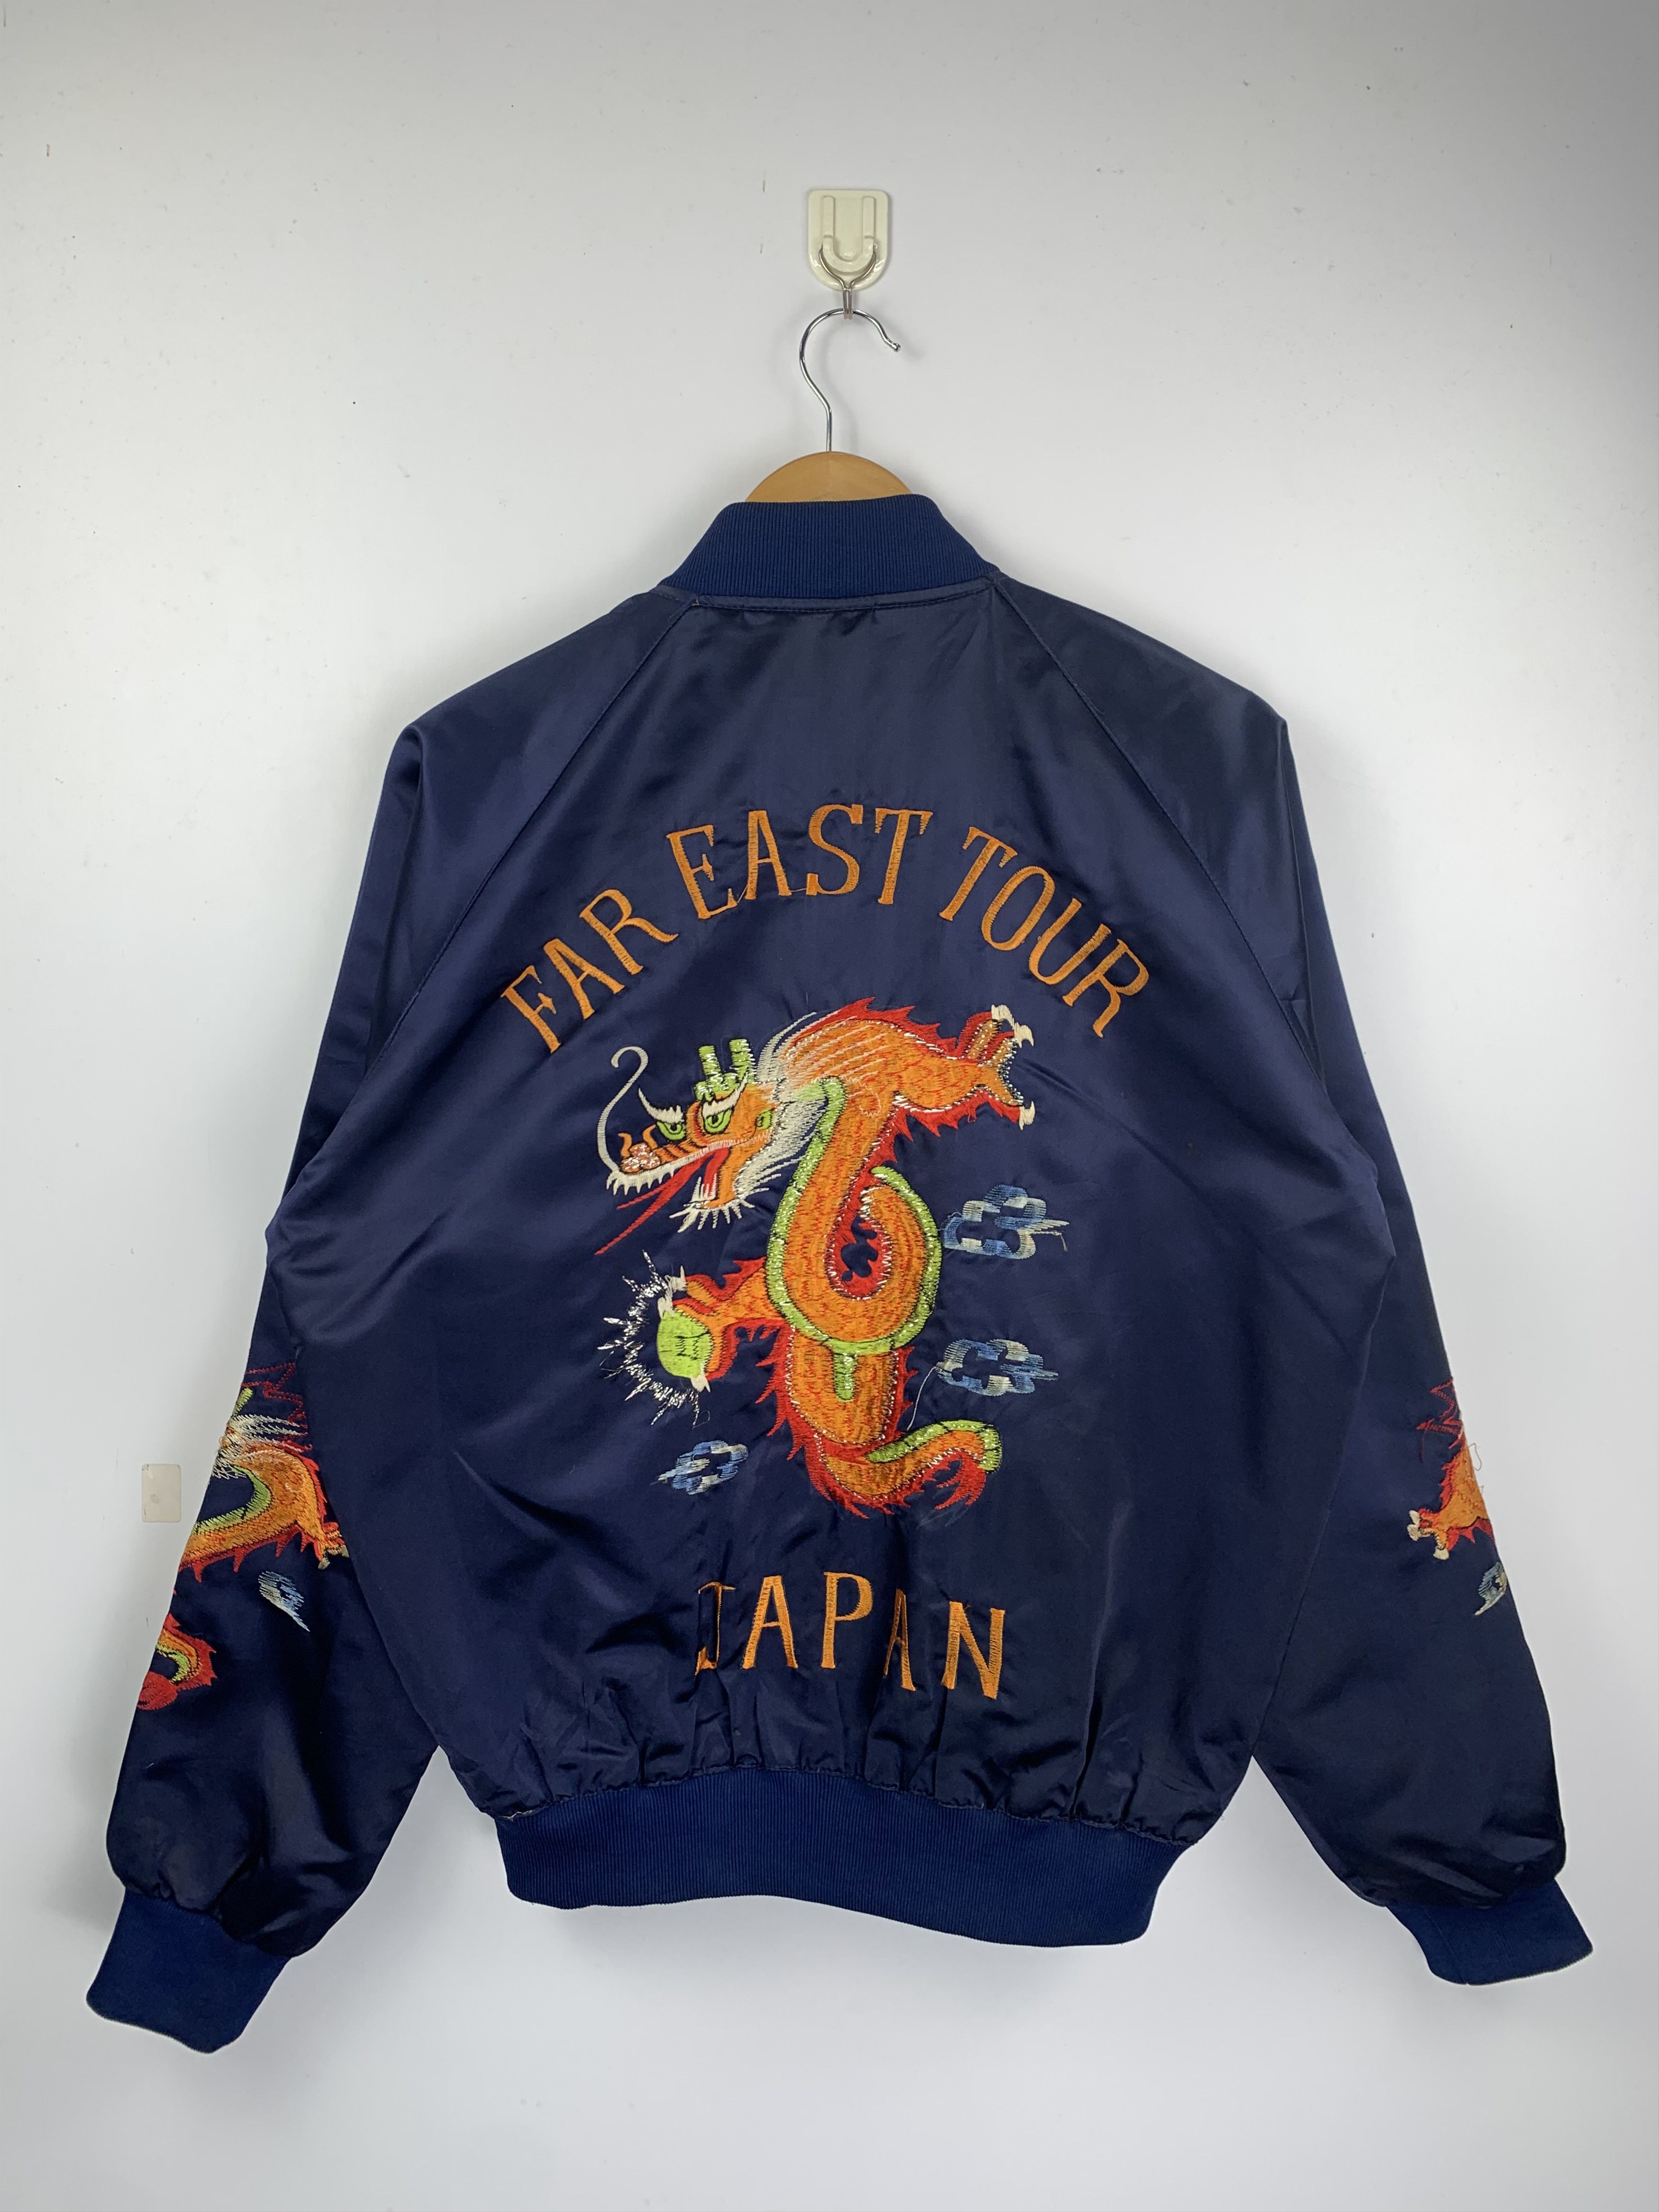 Far East Tour Jacket | Grailed